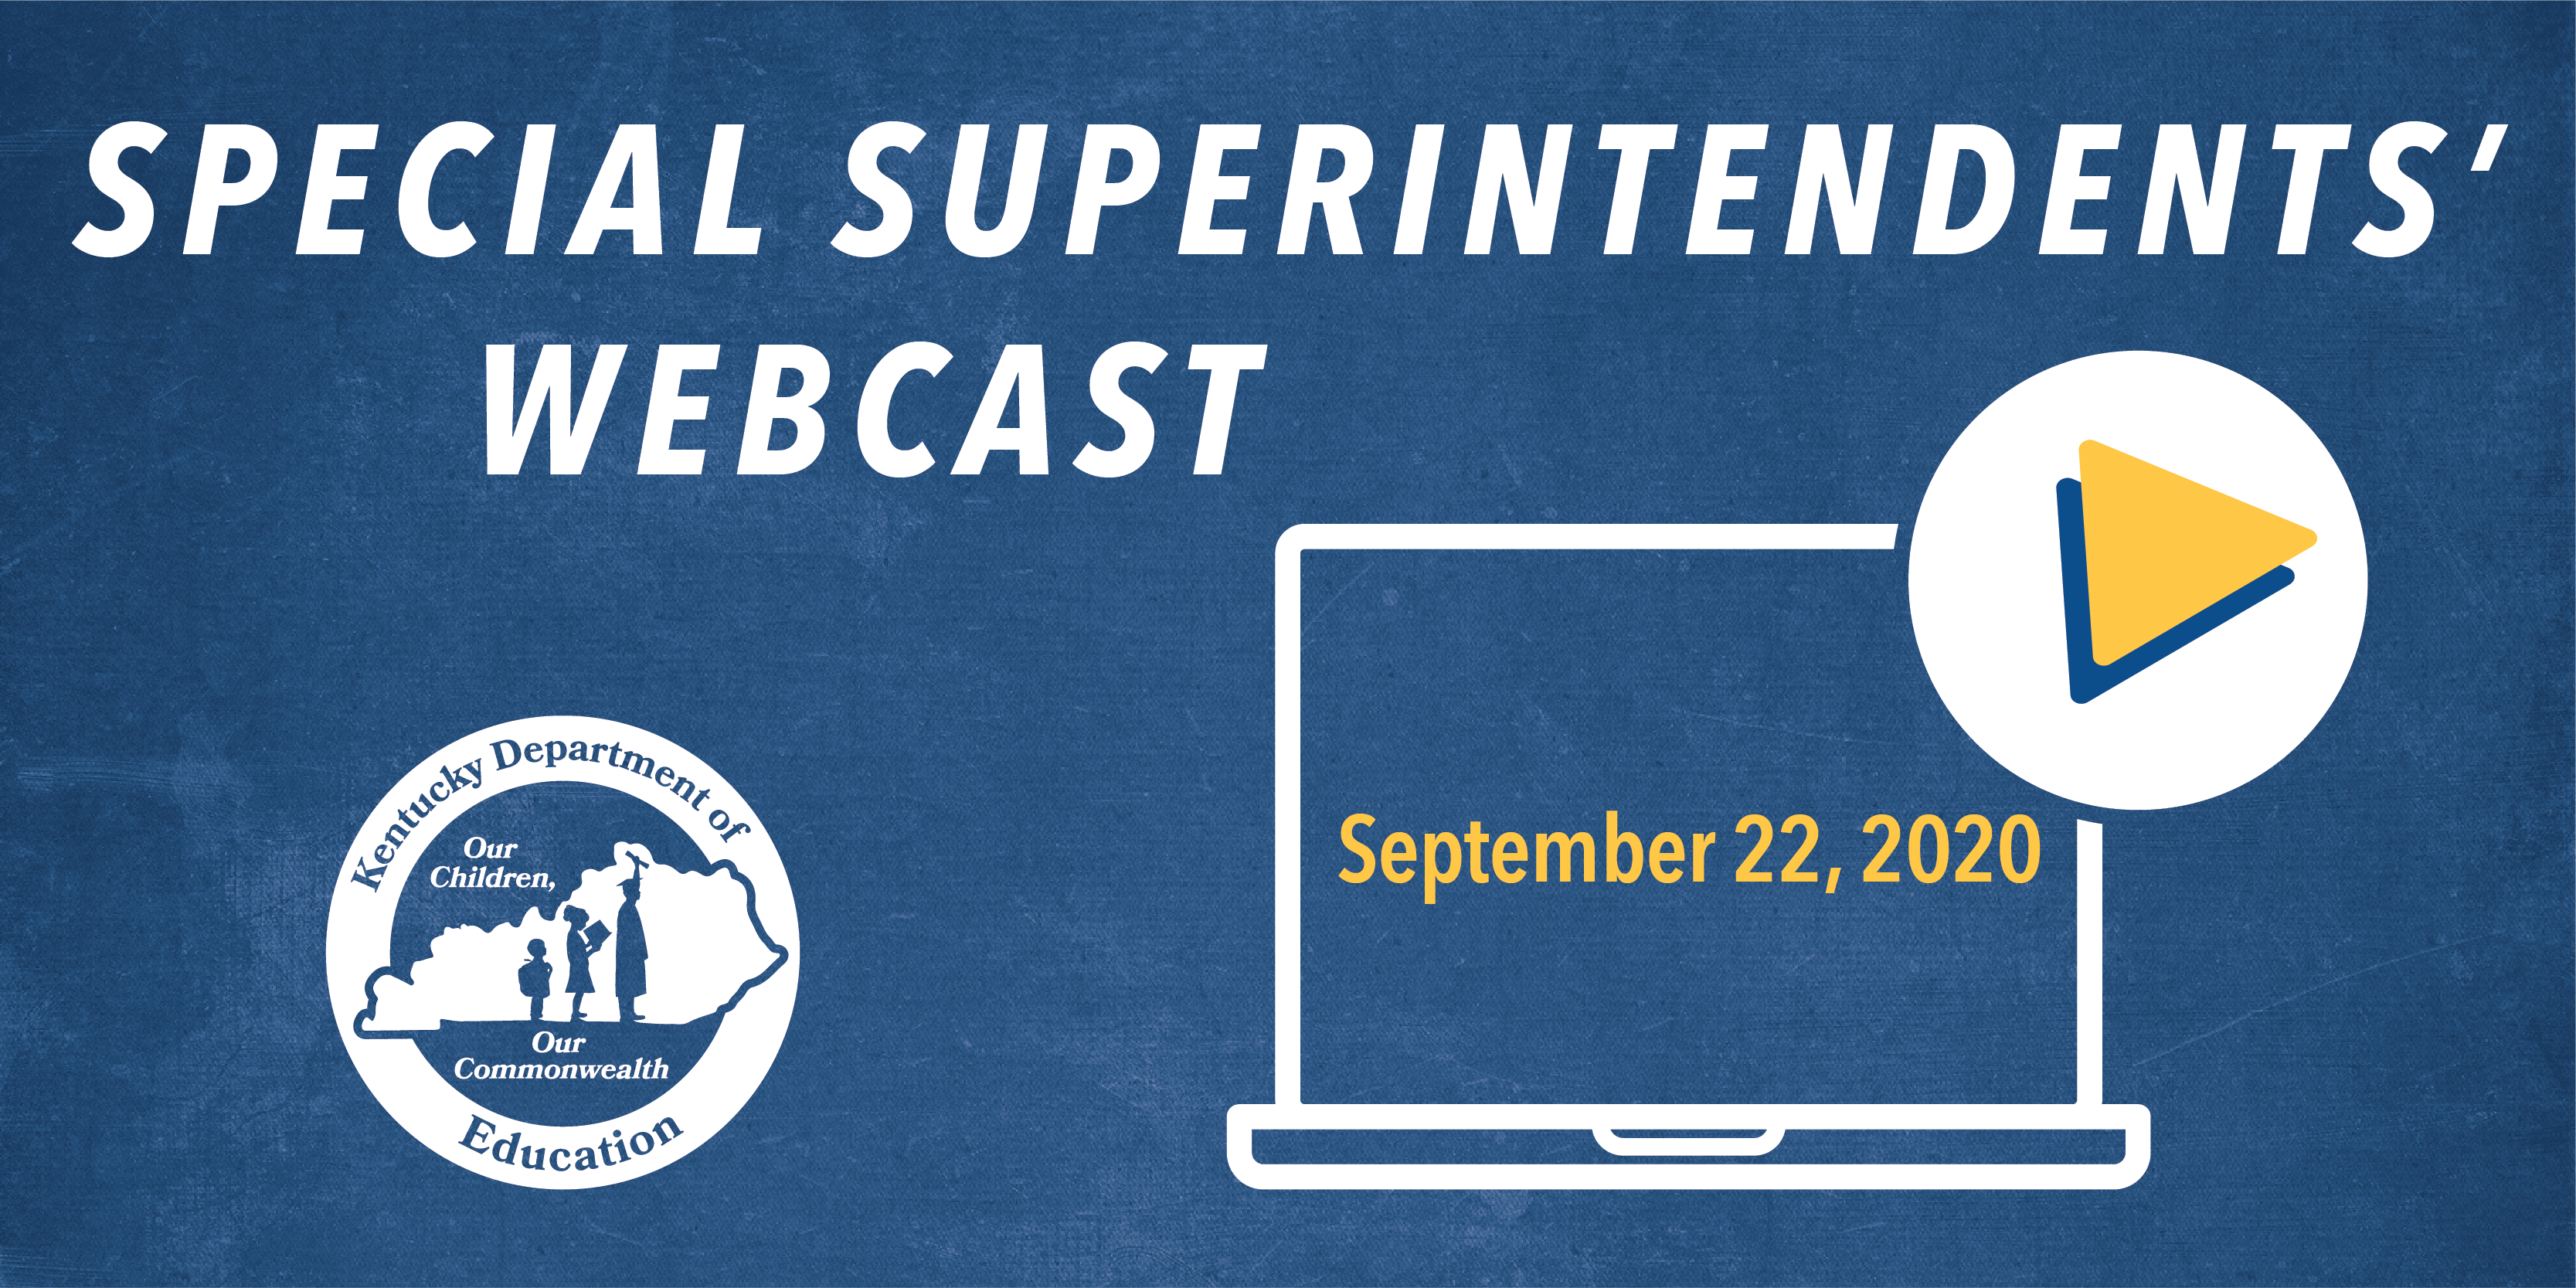 Special Superintendents' Webcast: September 22, 2020